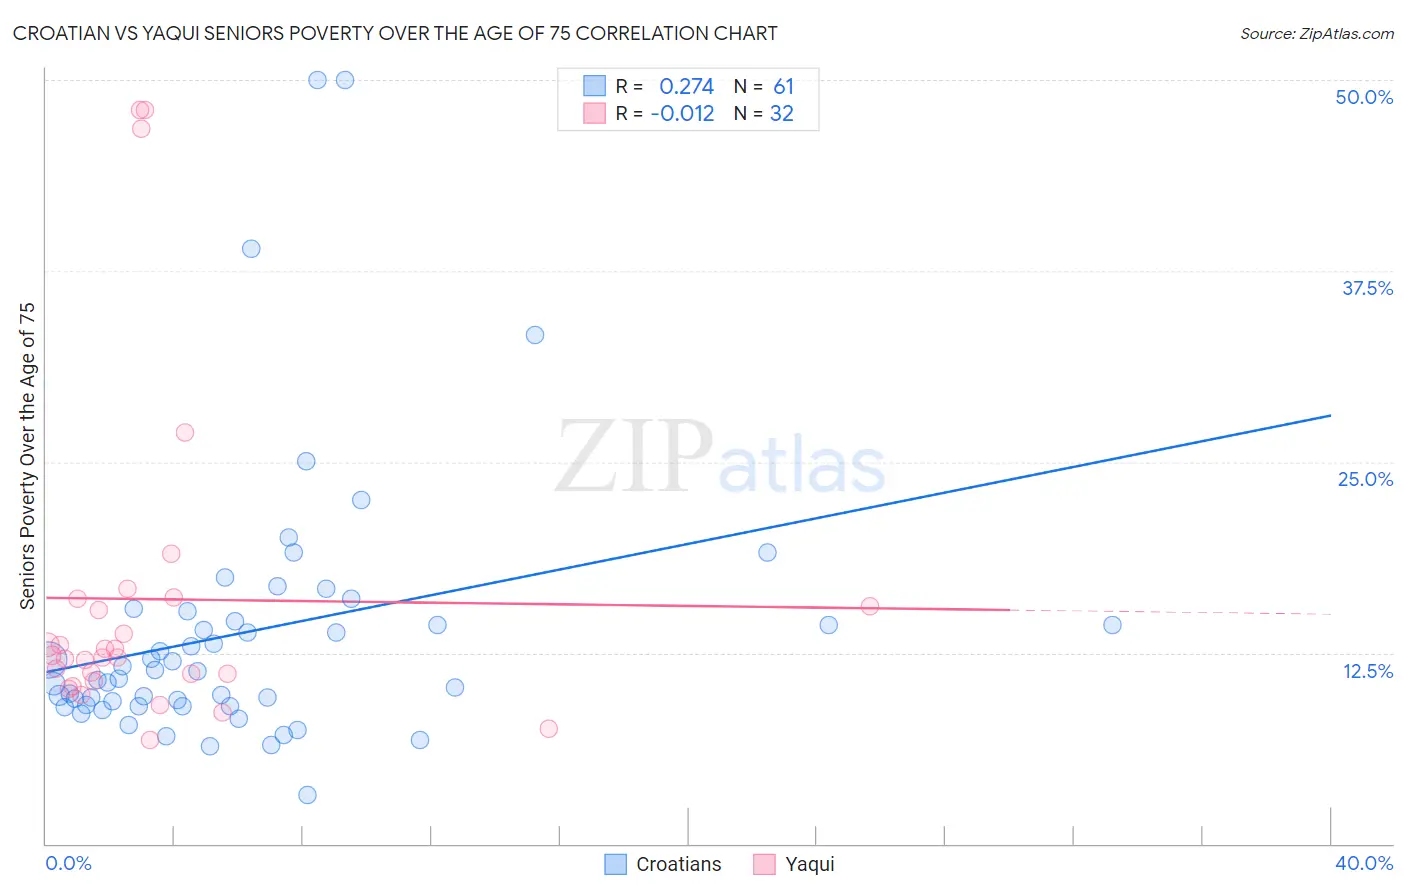 Croatian vs Yaqui Seniors Poverty Over the Age of 75